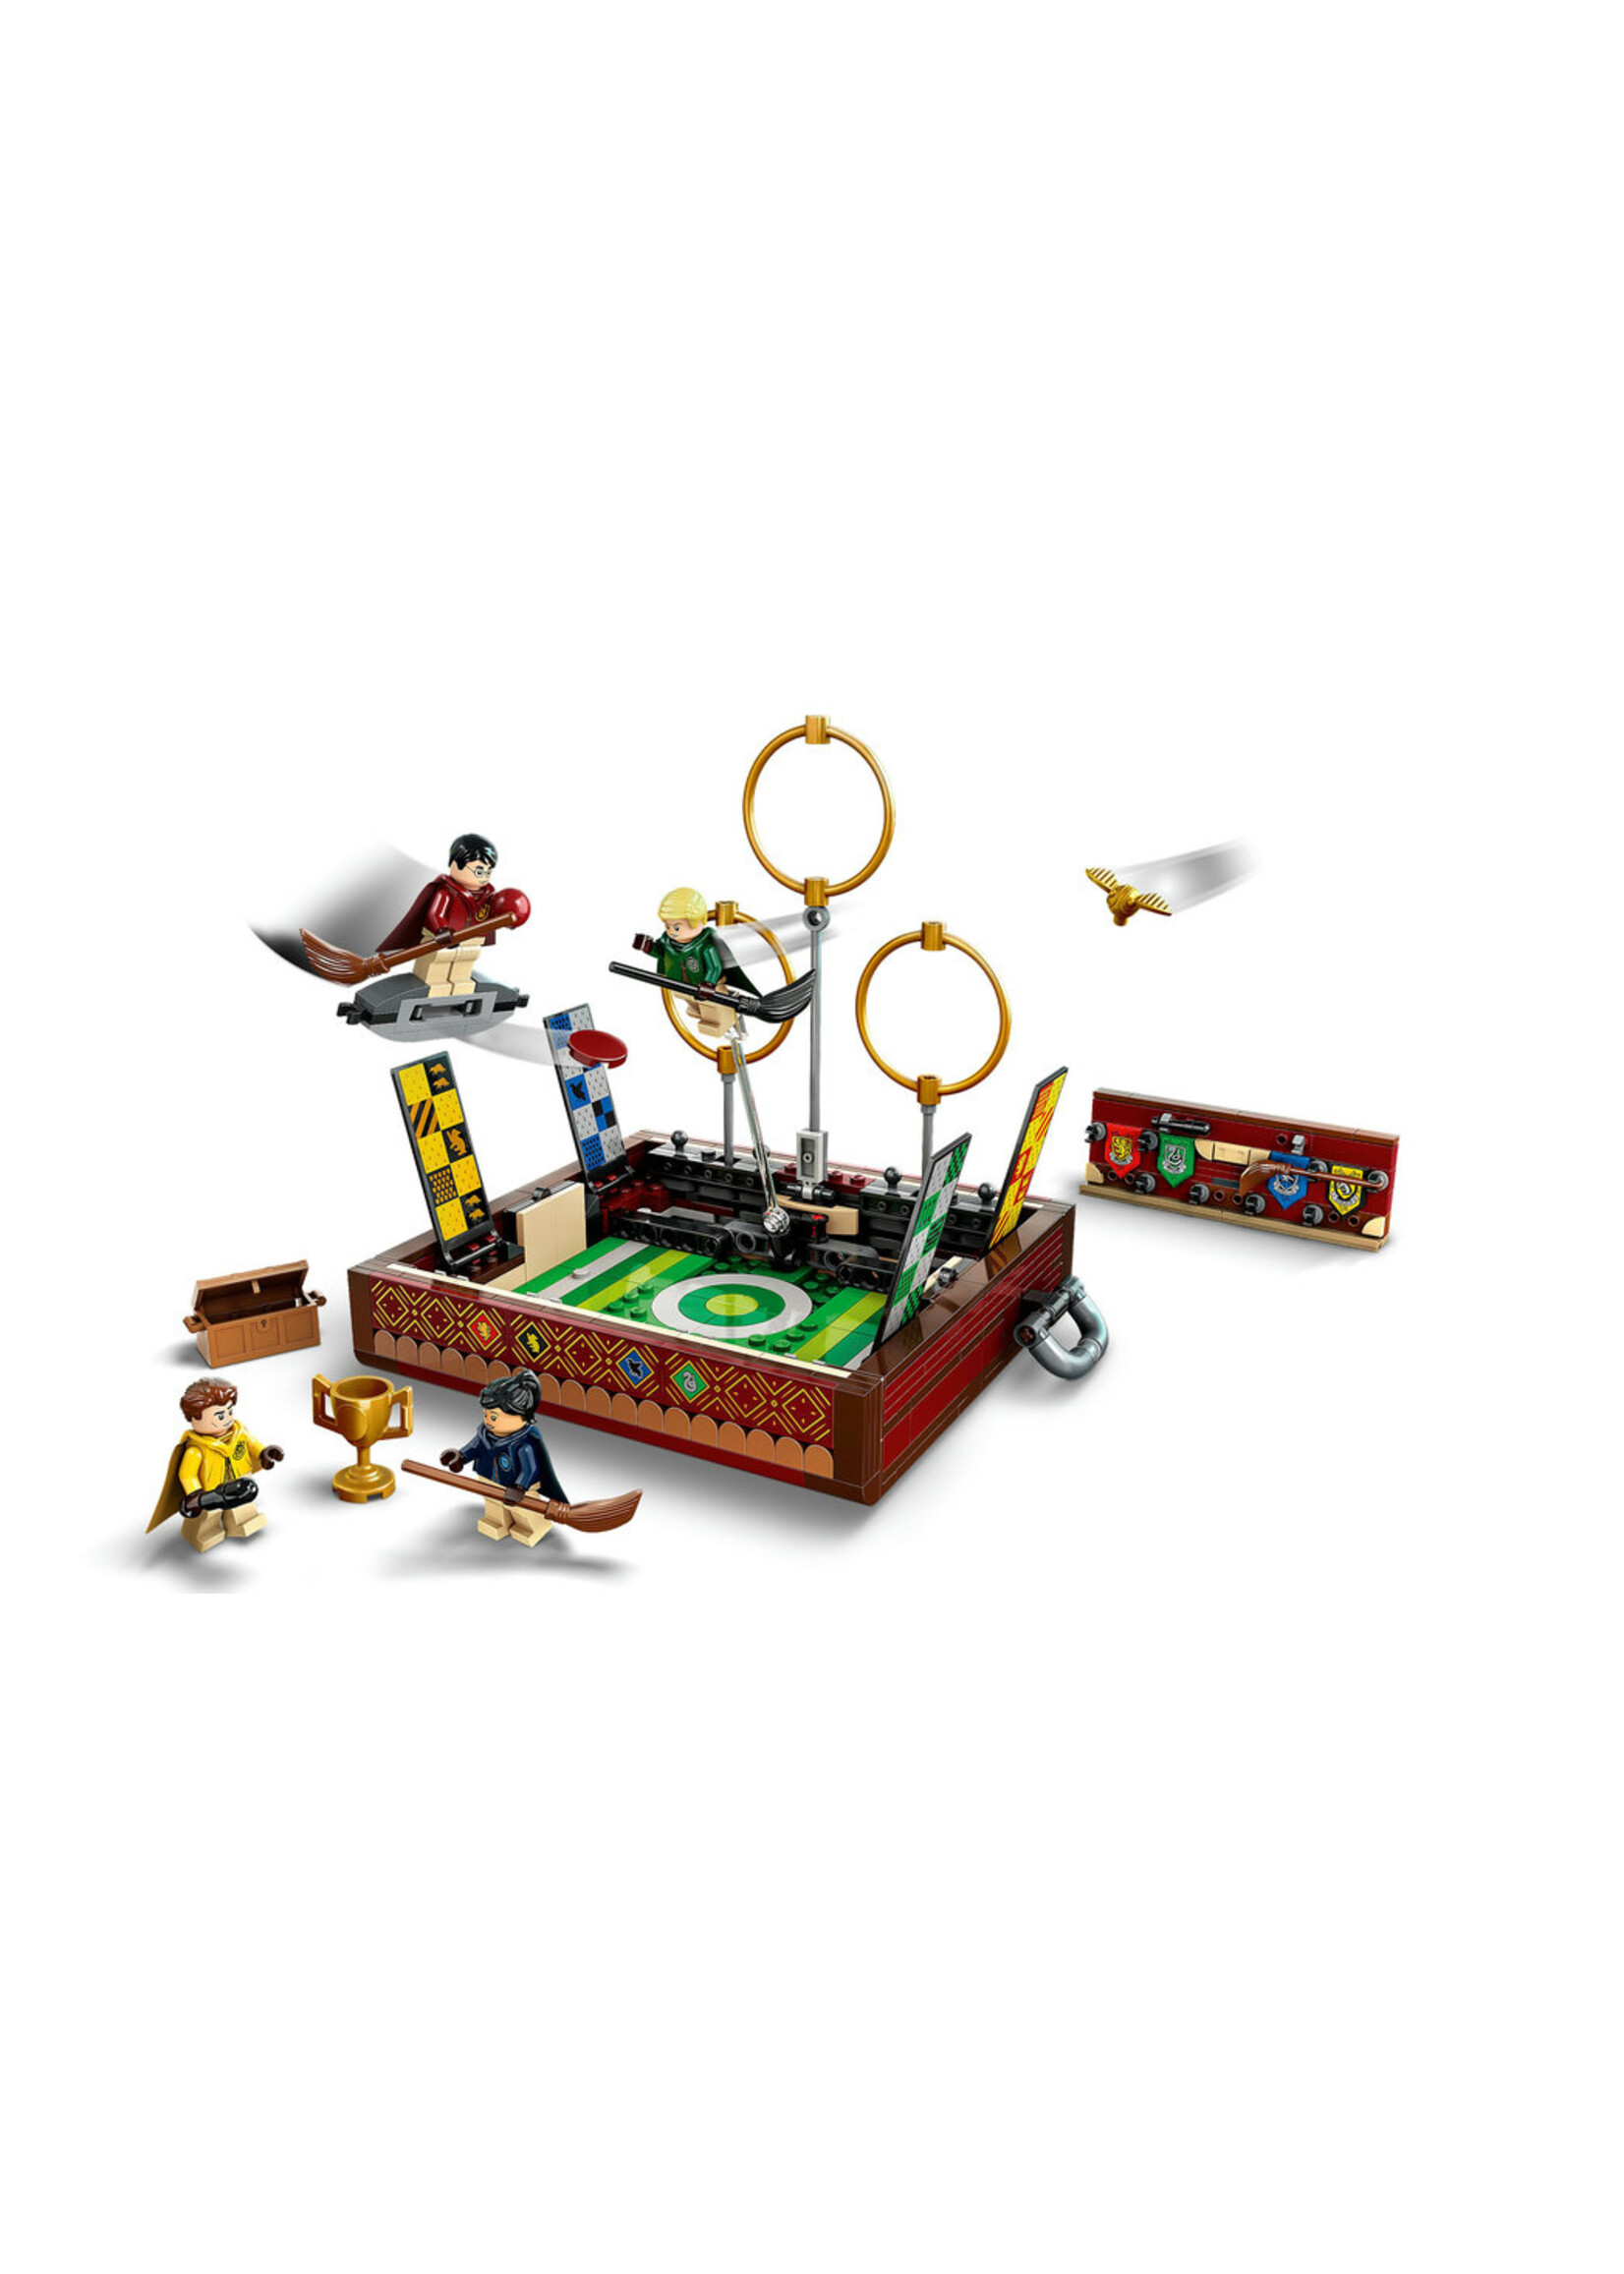 LEGO 76416 - Quidditch Trunk